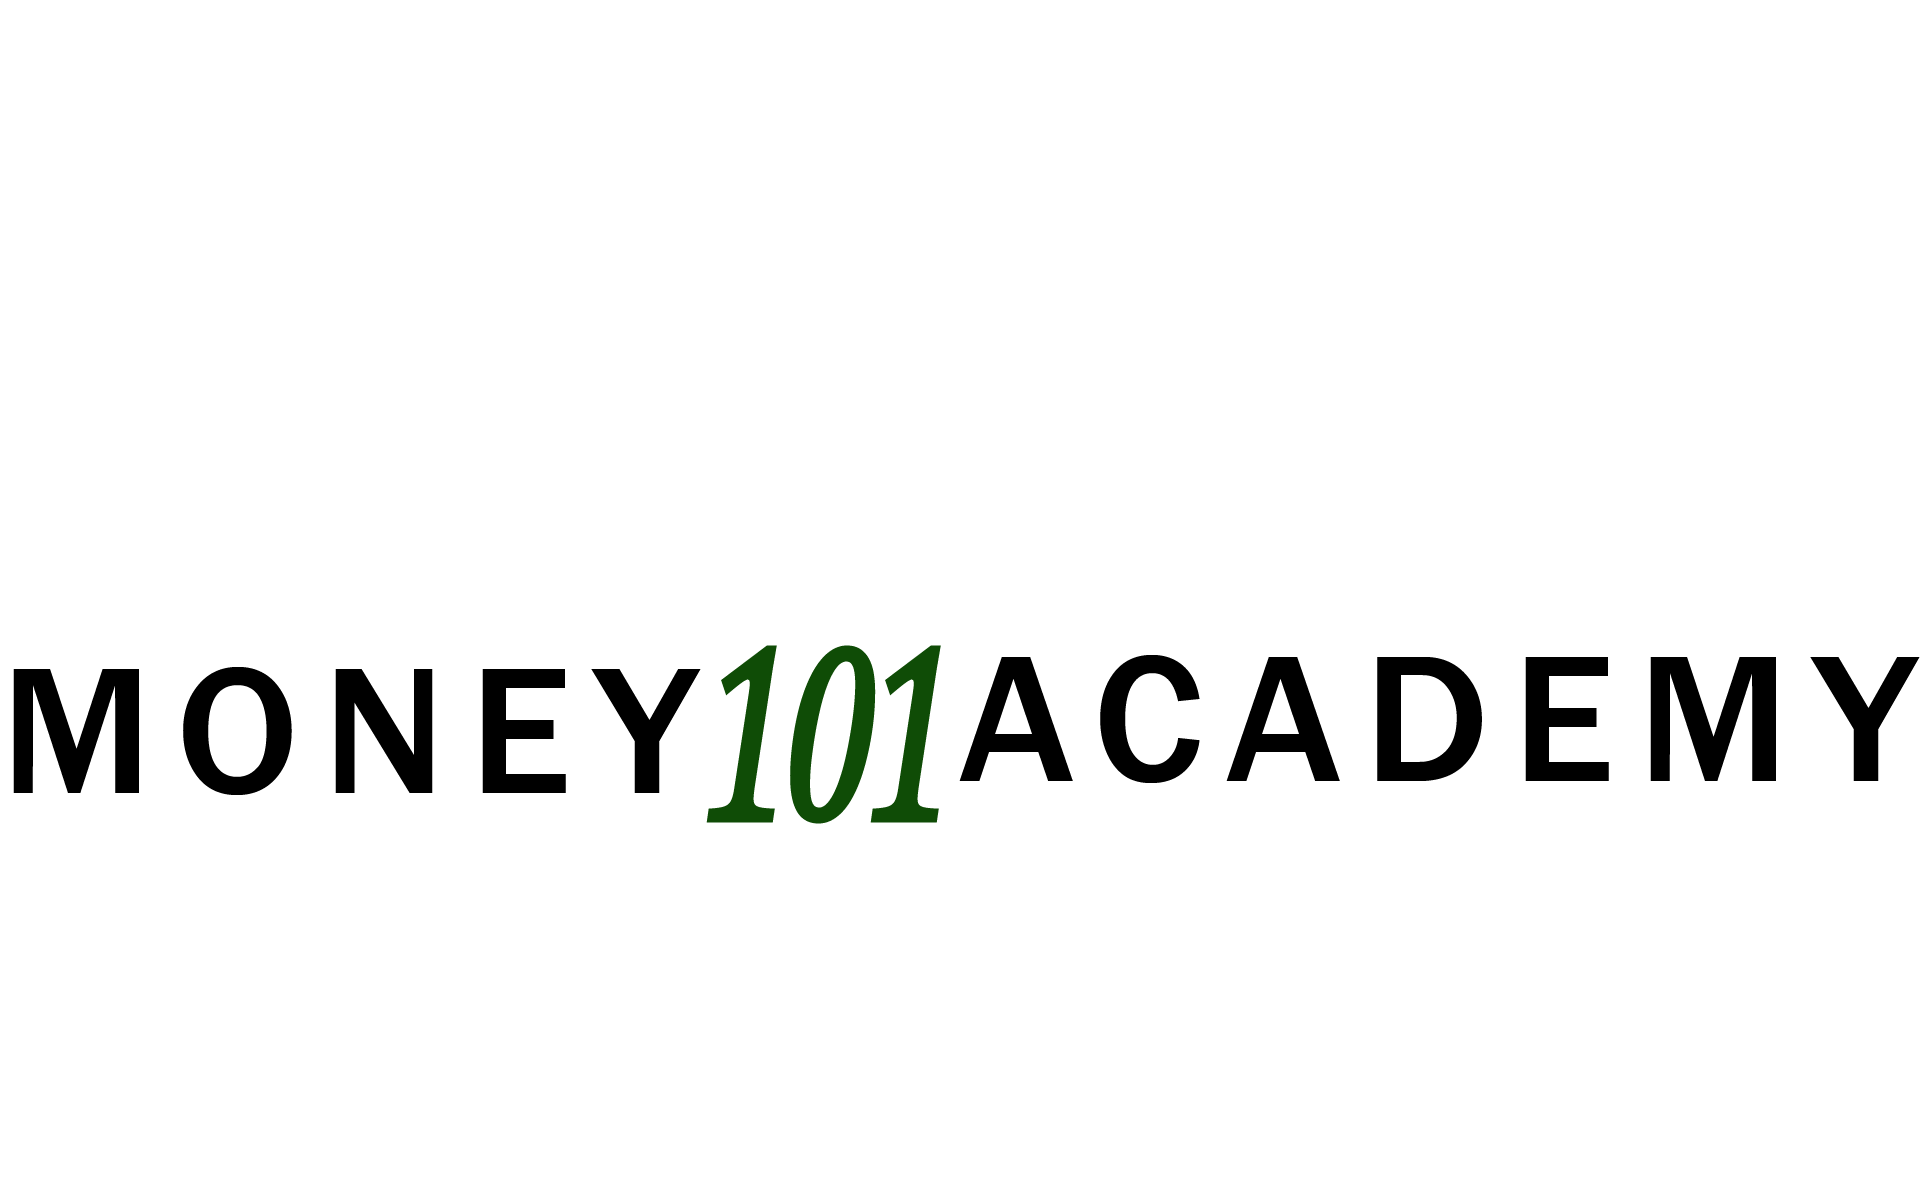 Money 101 Academy logo